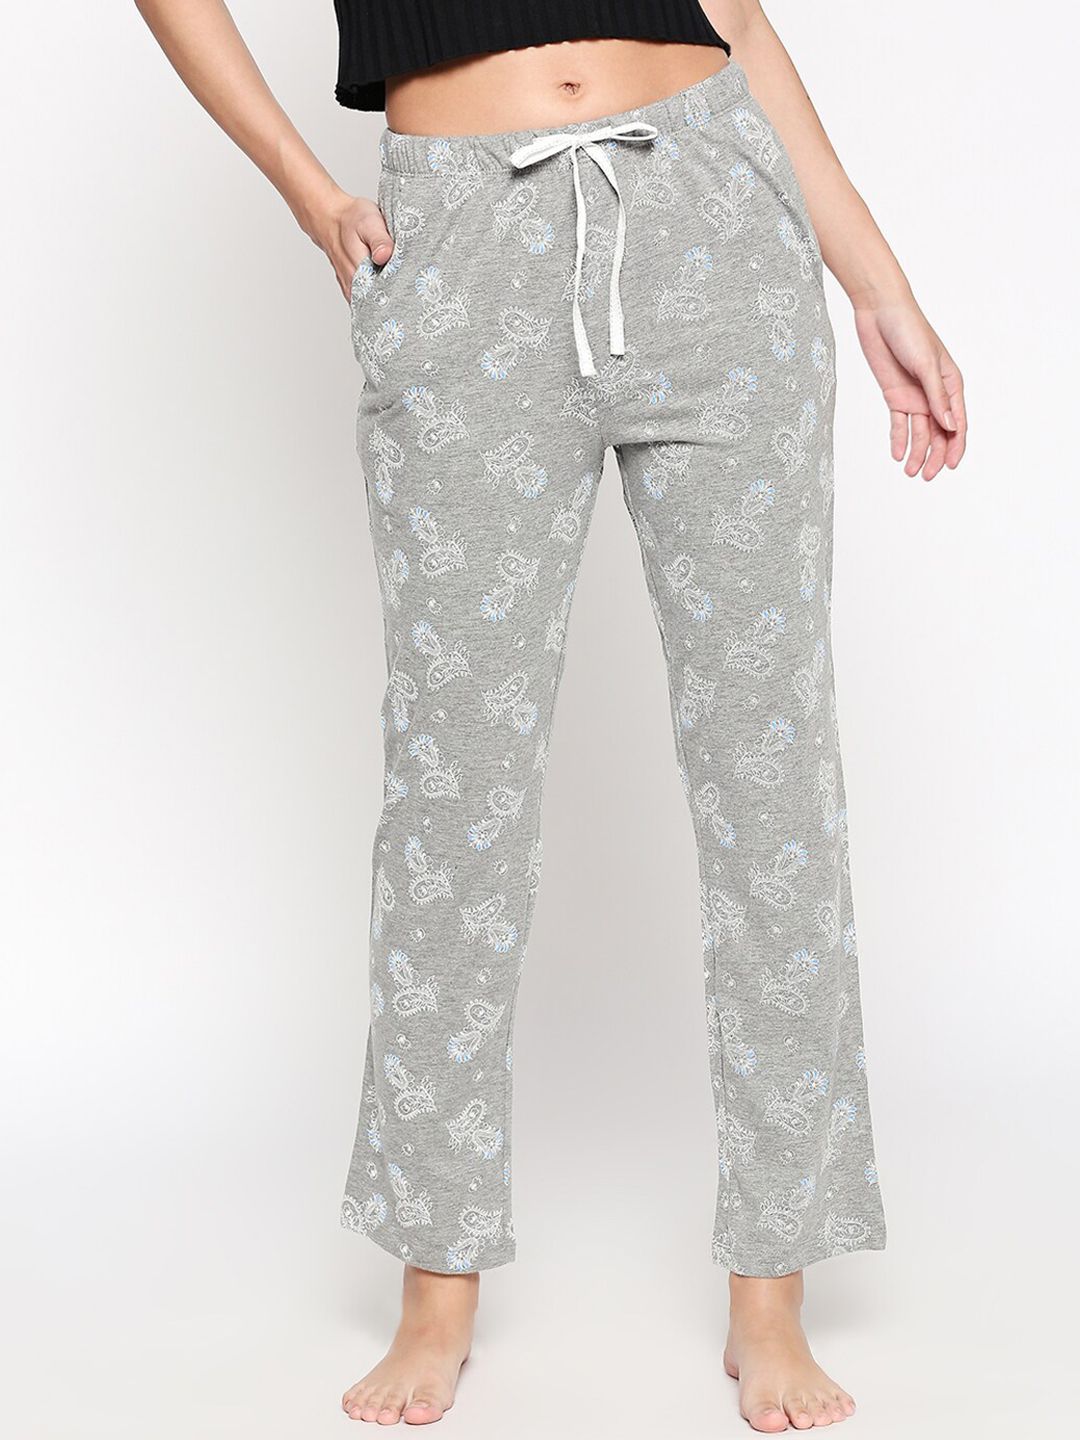 Dreamz by Pantaloons Women Grey Printed Lounge Pants Price in India